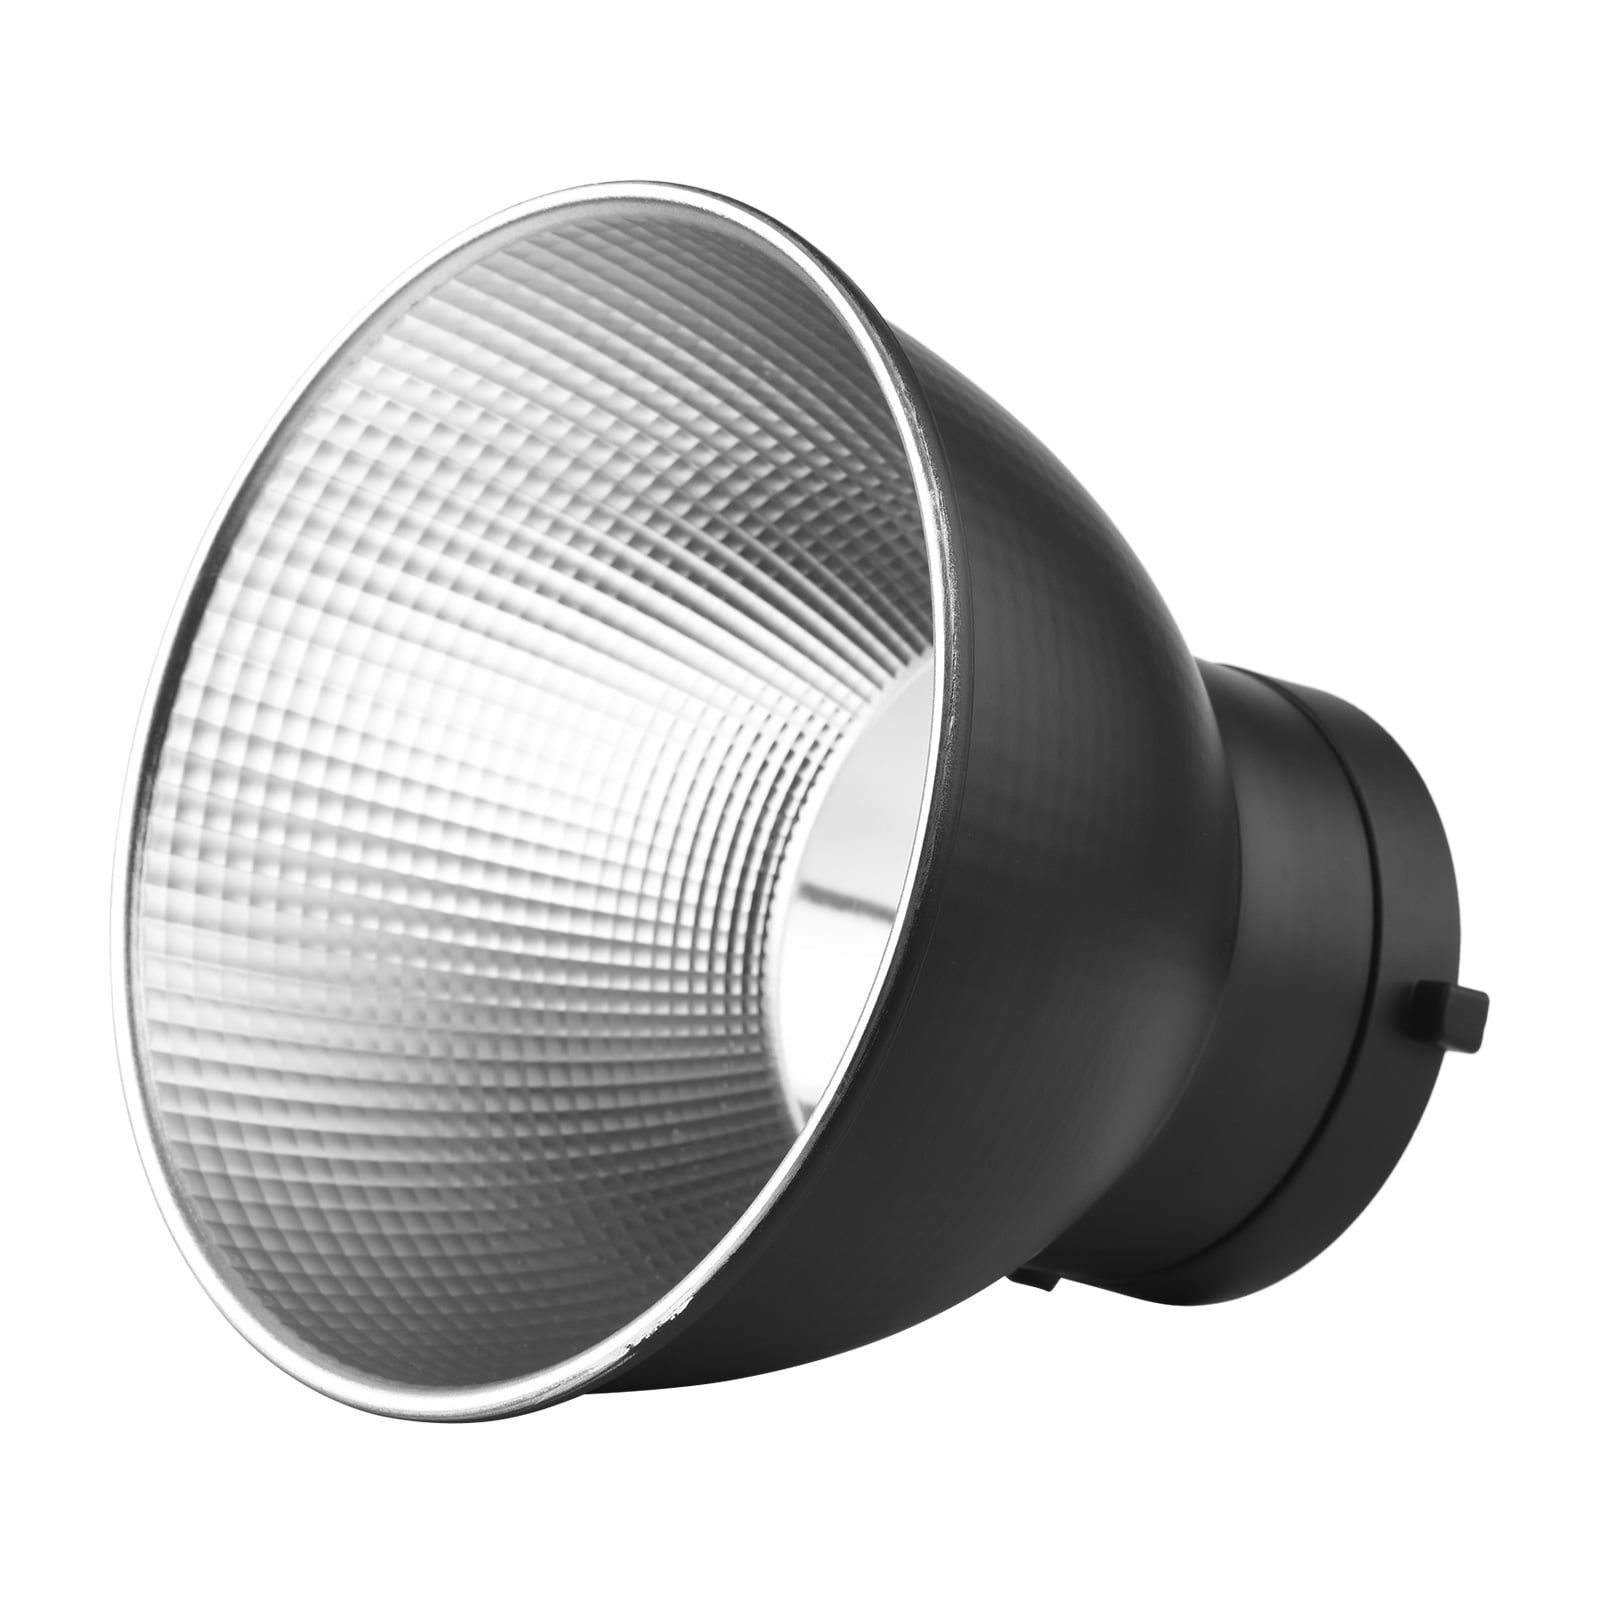 Bowens LENCARTA 7" Reflector Flash Lamp Shade Standard DishBowens S-Fit Type Godox 